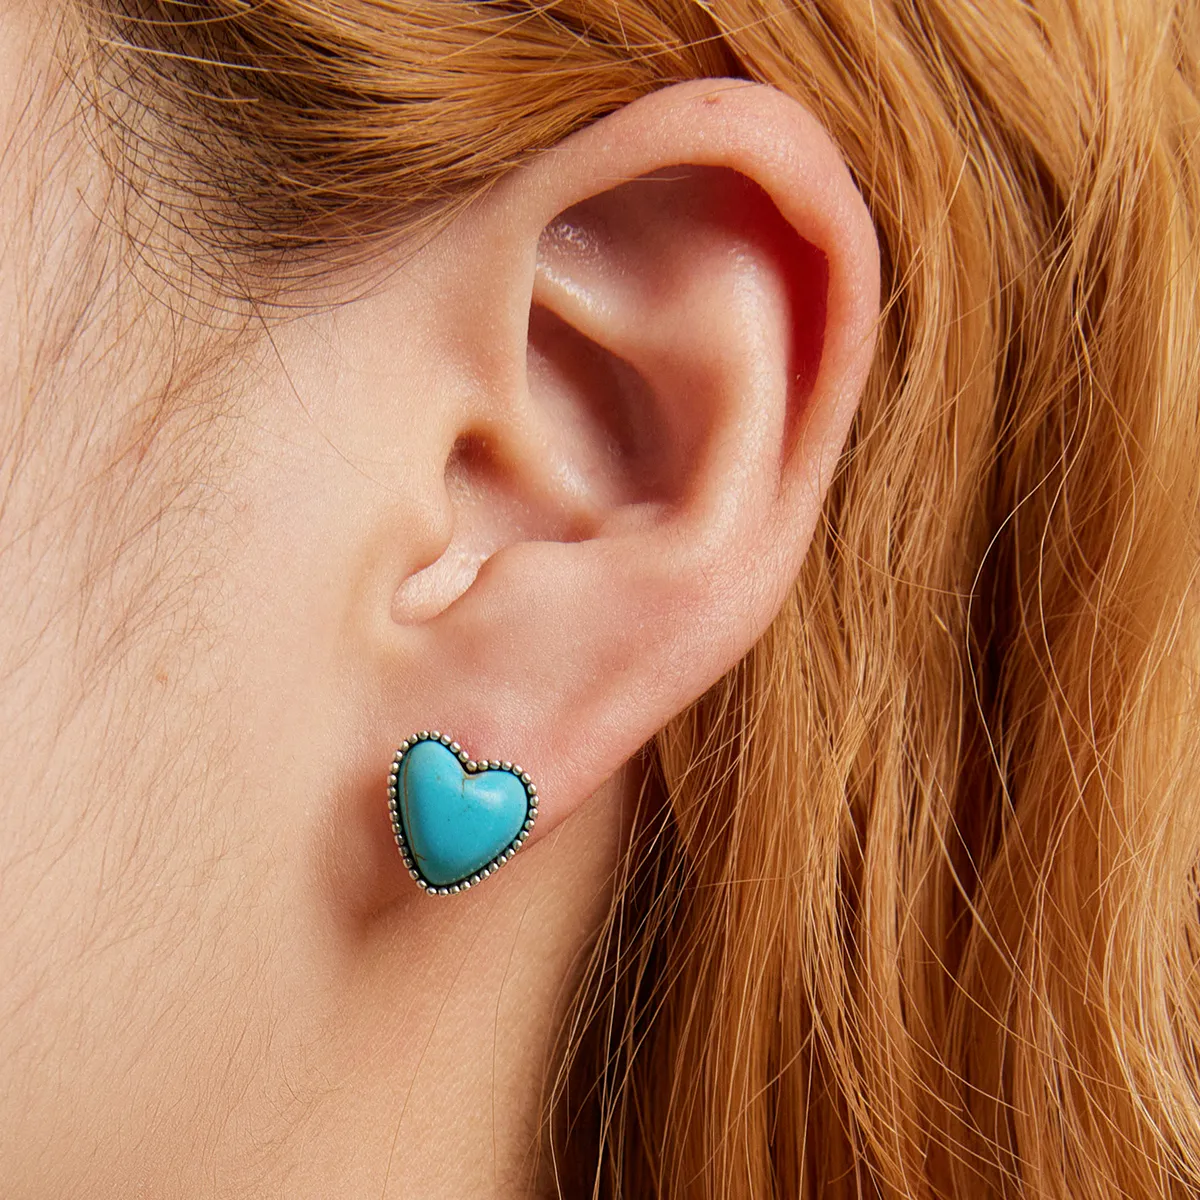 Pandora Style Love Turquoise Stud Earrings - BSE591